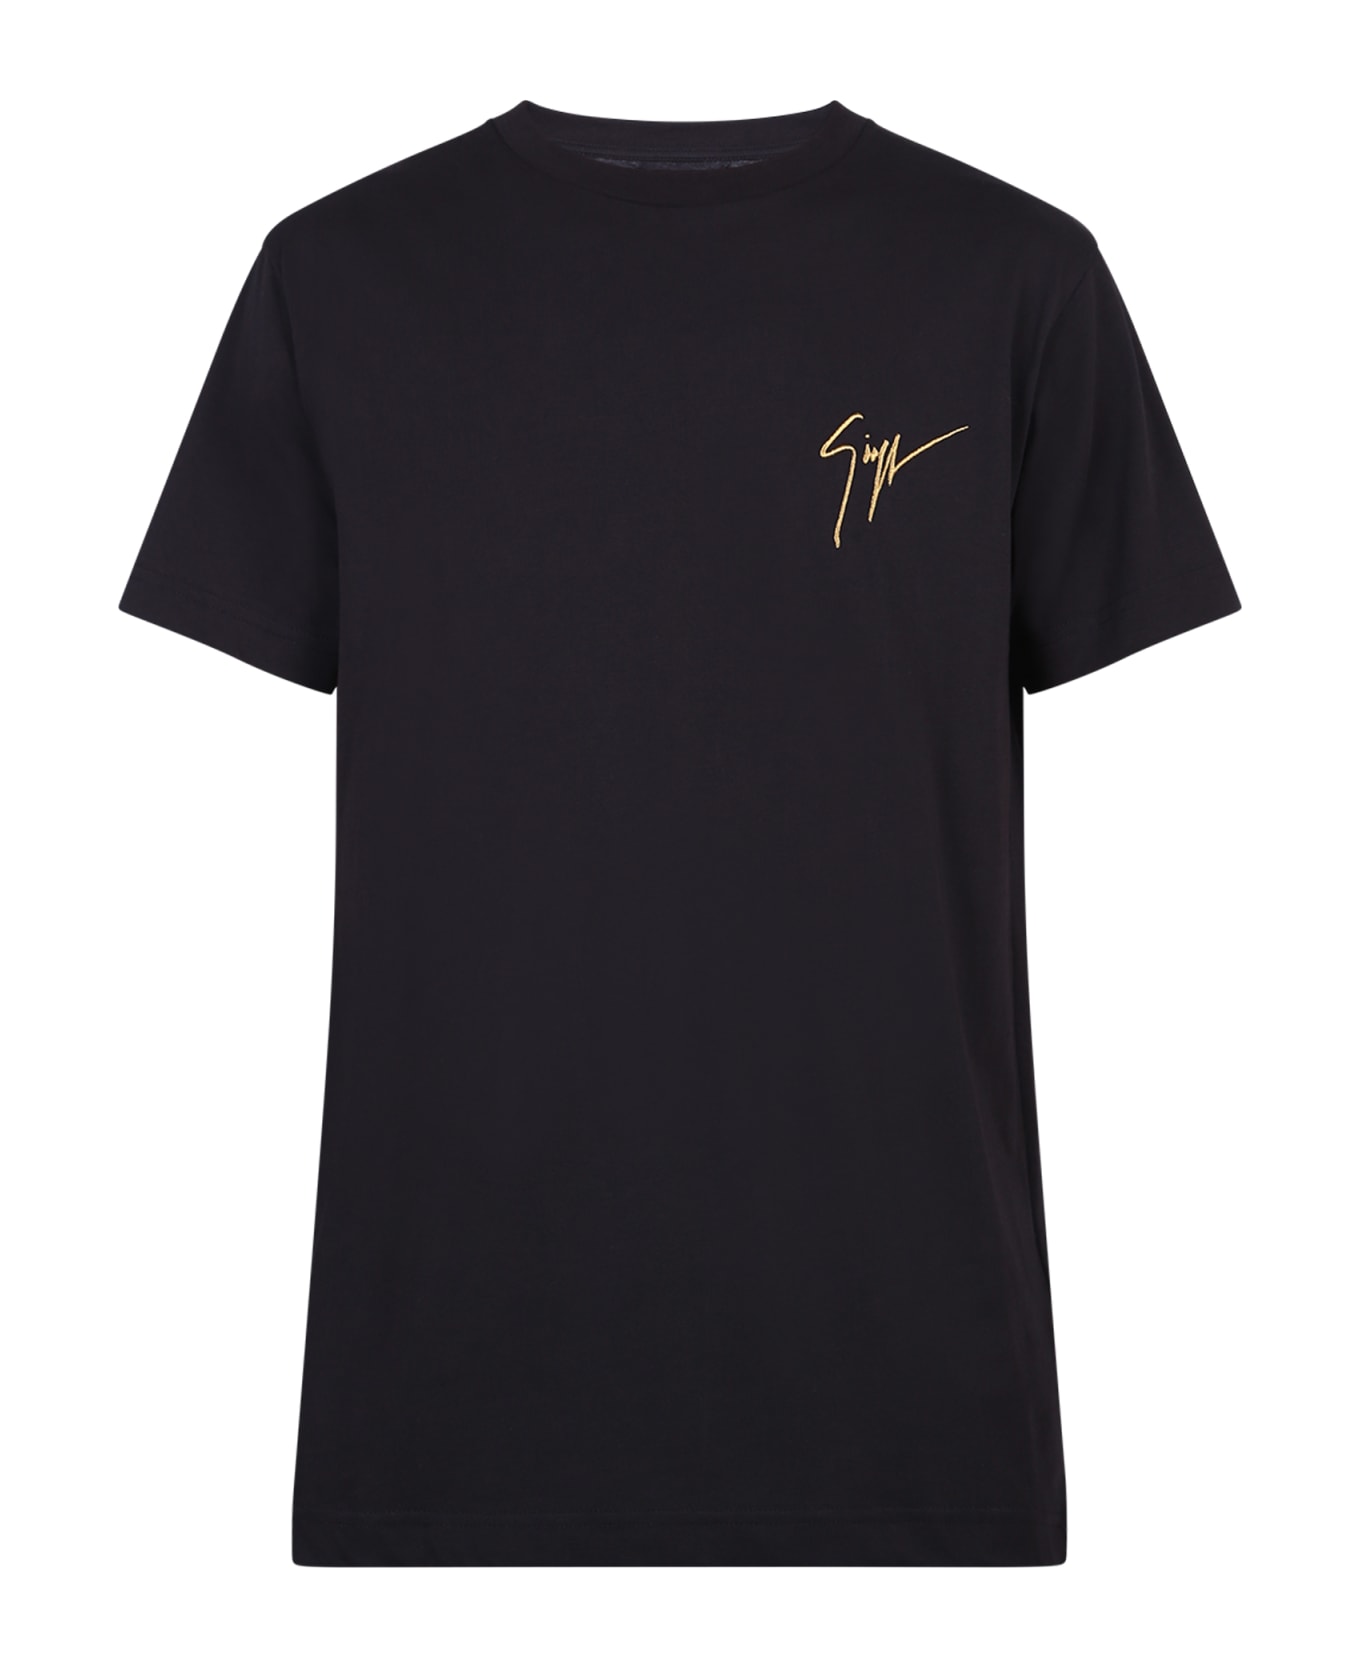 Giuseppe Zanotti Lr-01 T-shirt In Black Cotton - Nero